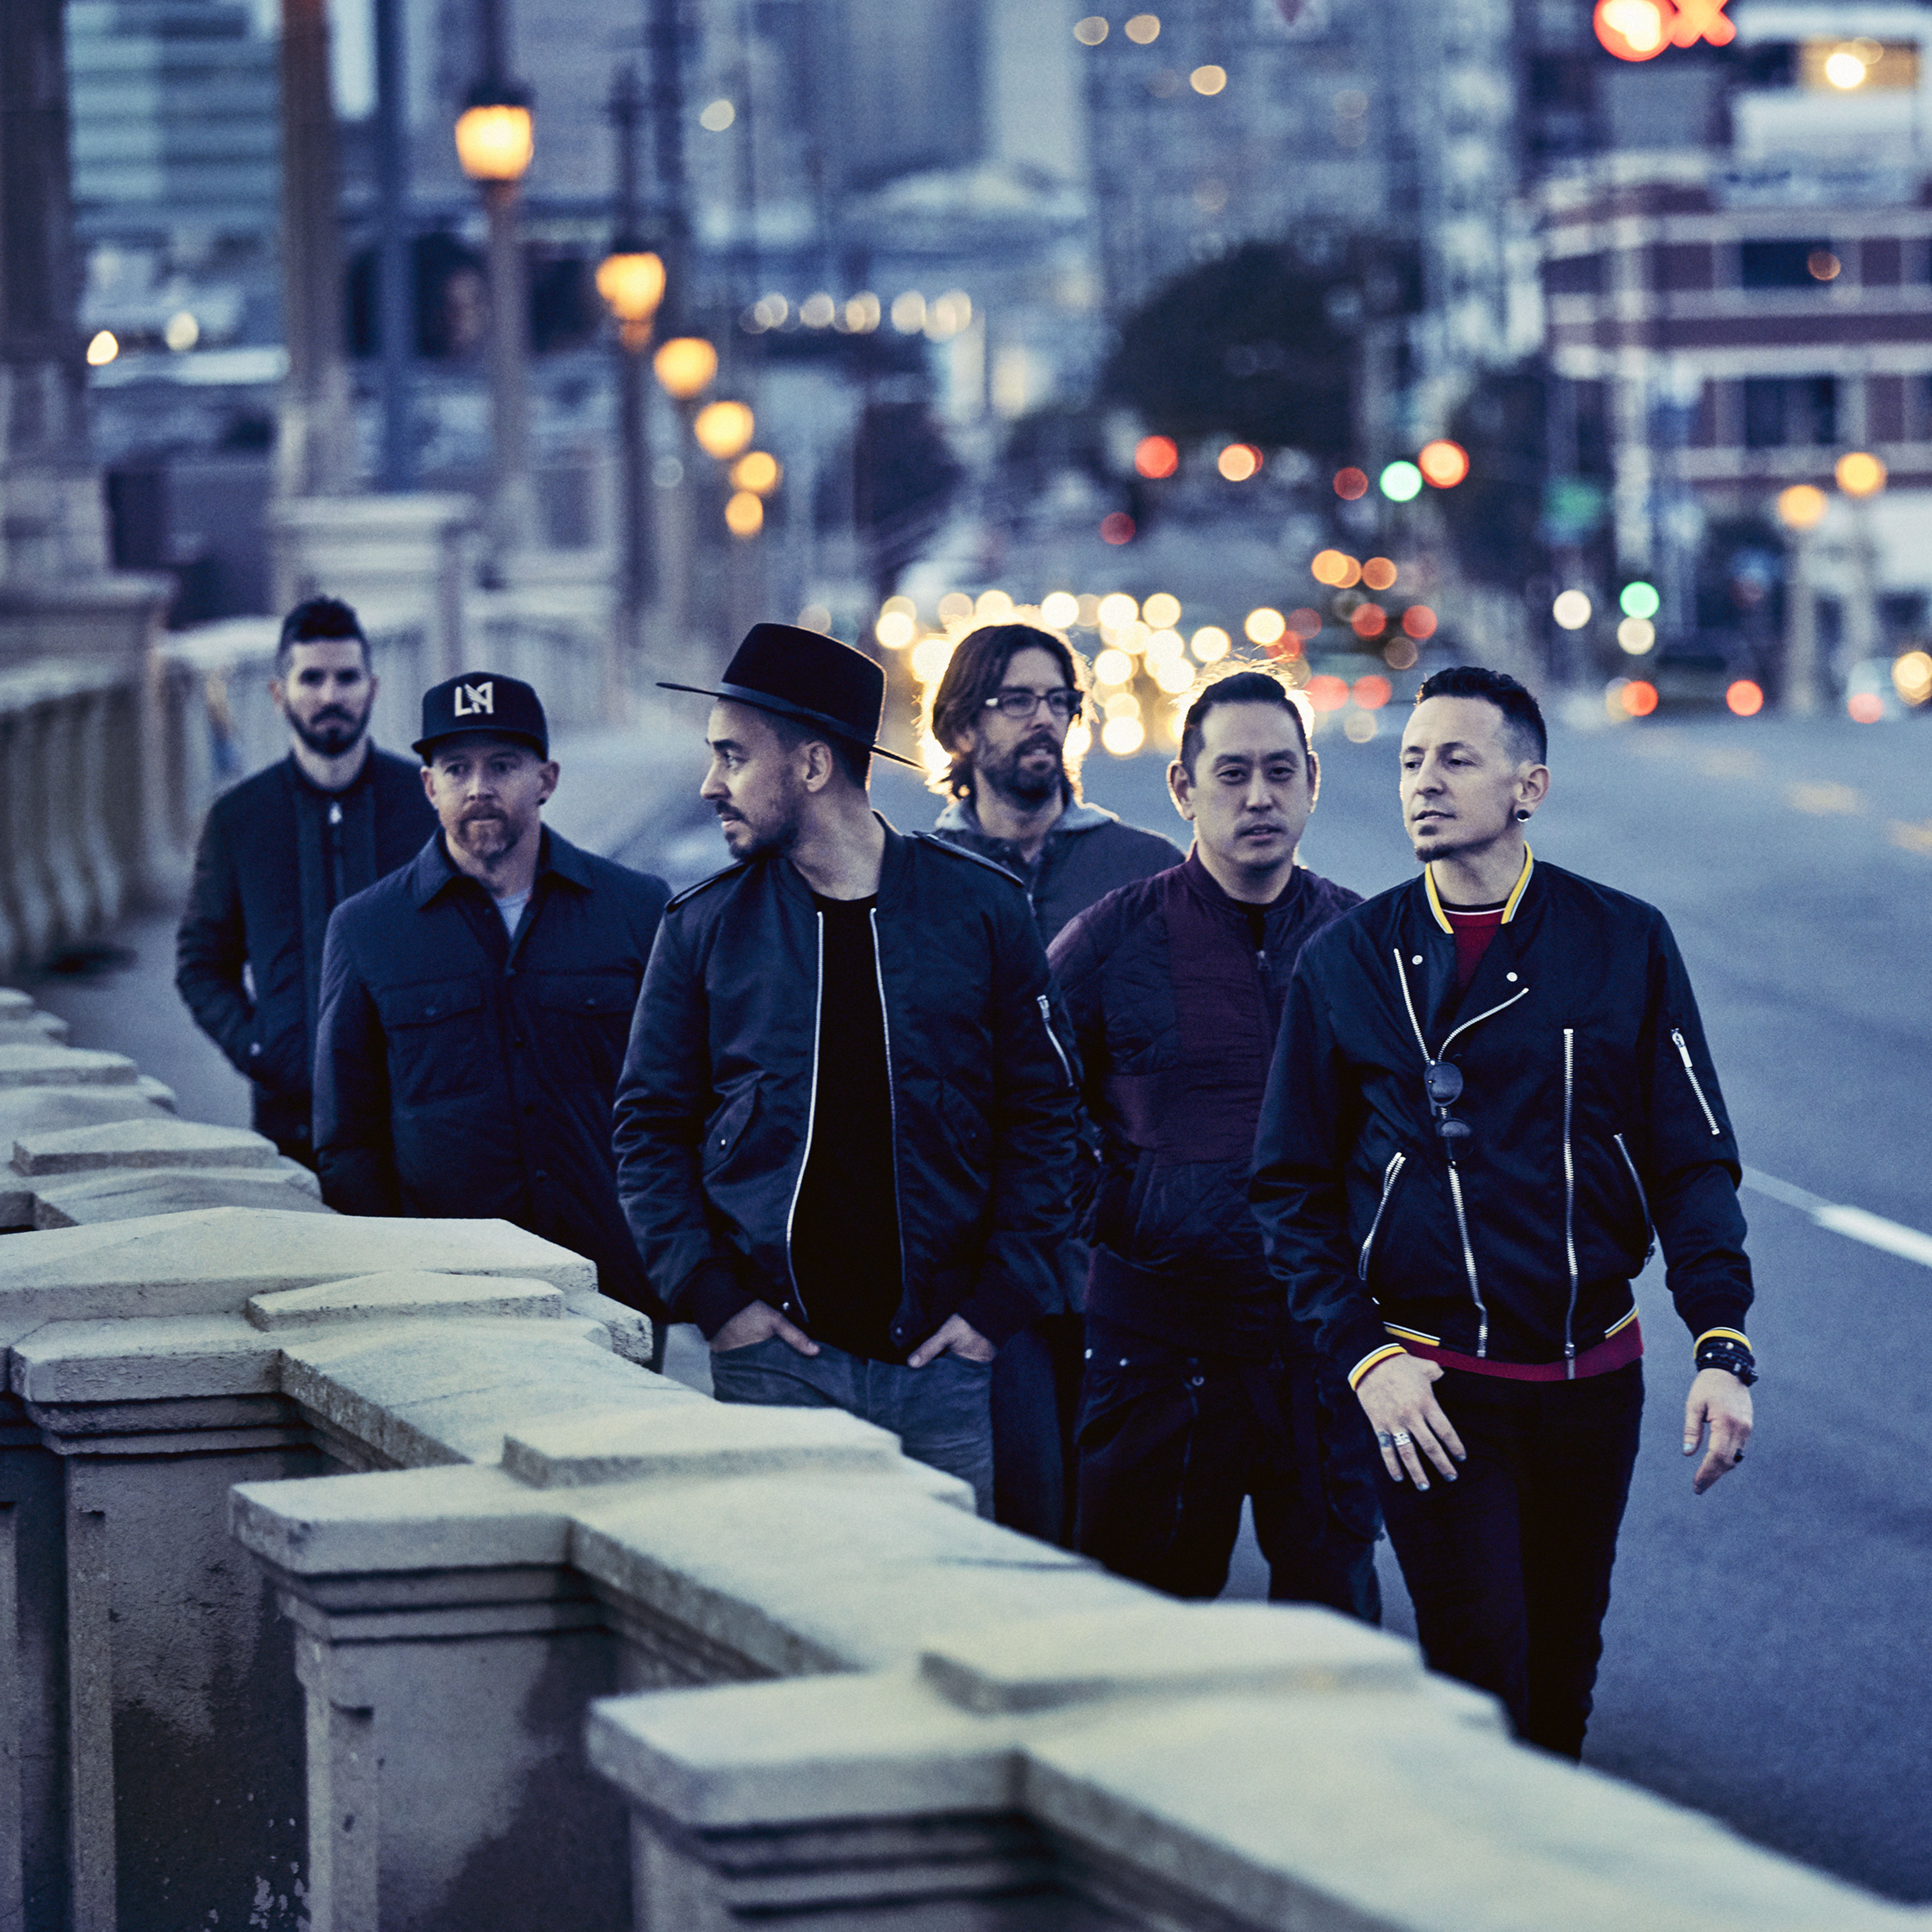 Linkin Park Music